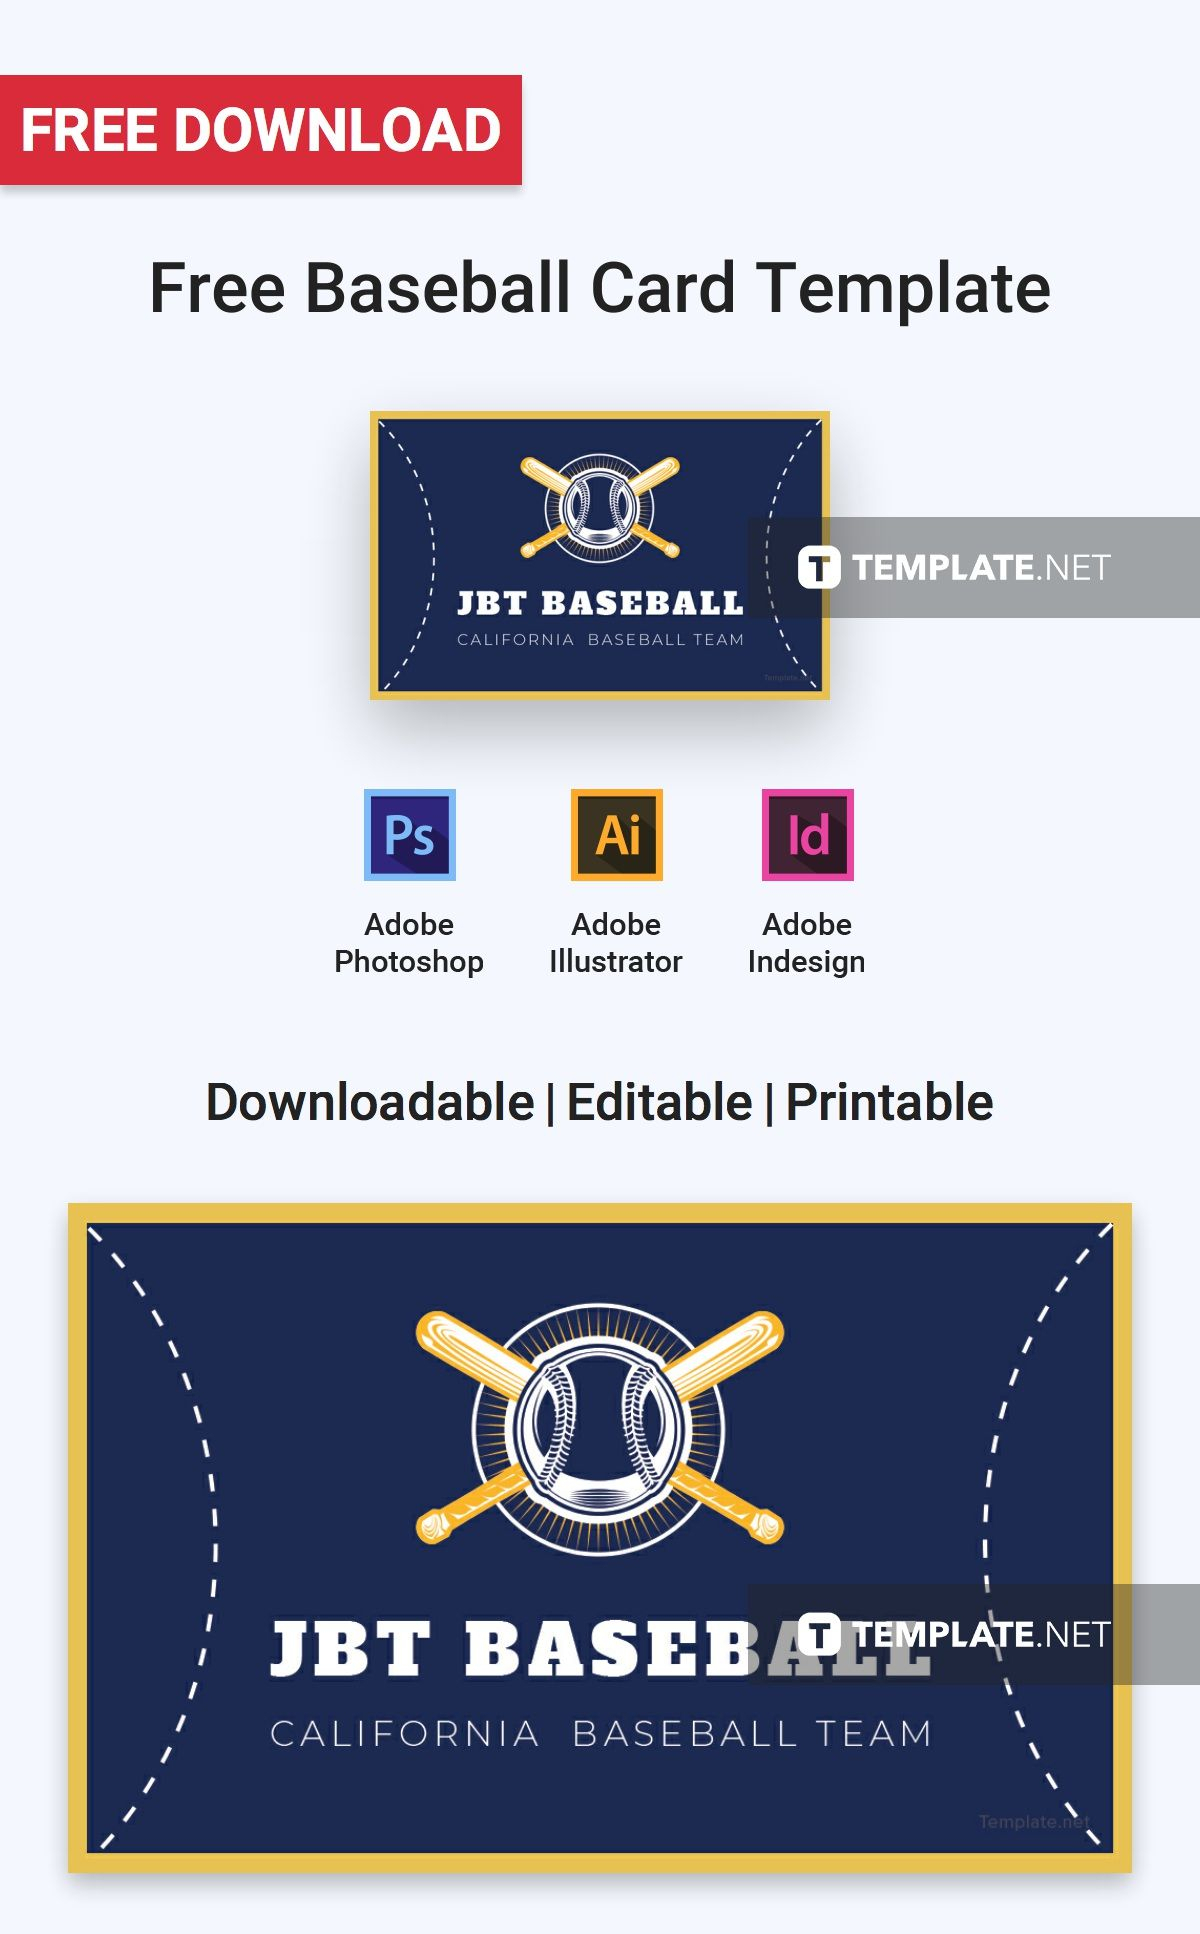 Free Baseball Card | Card Templates & Designs 2019 Pertaining To Baseball Card Template Microsoft Word